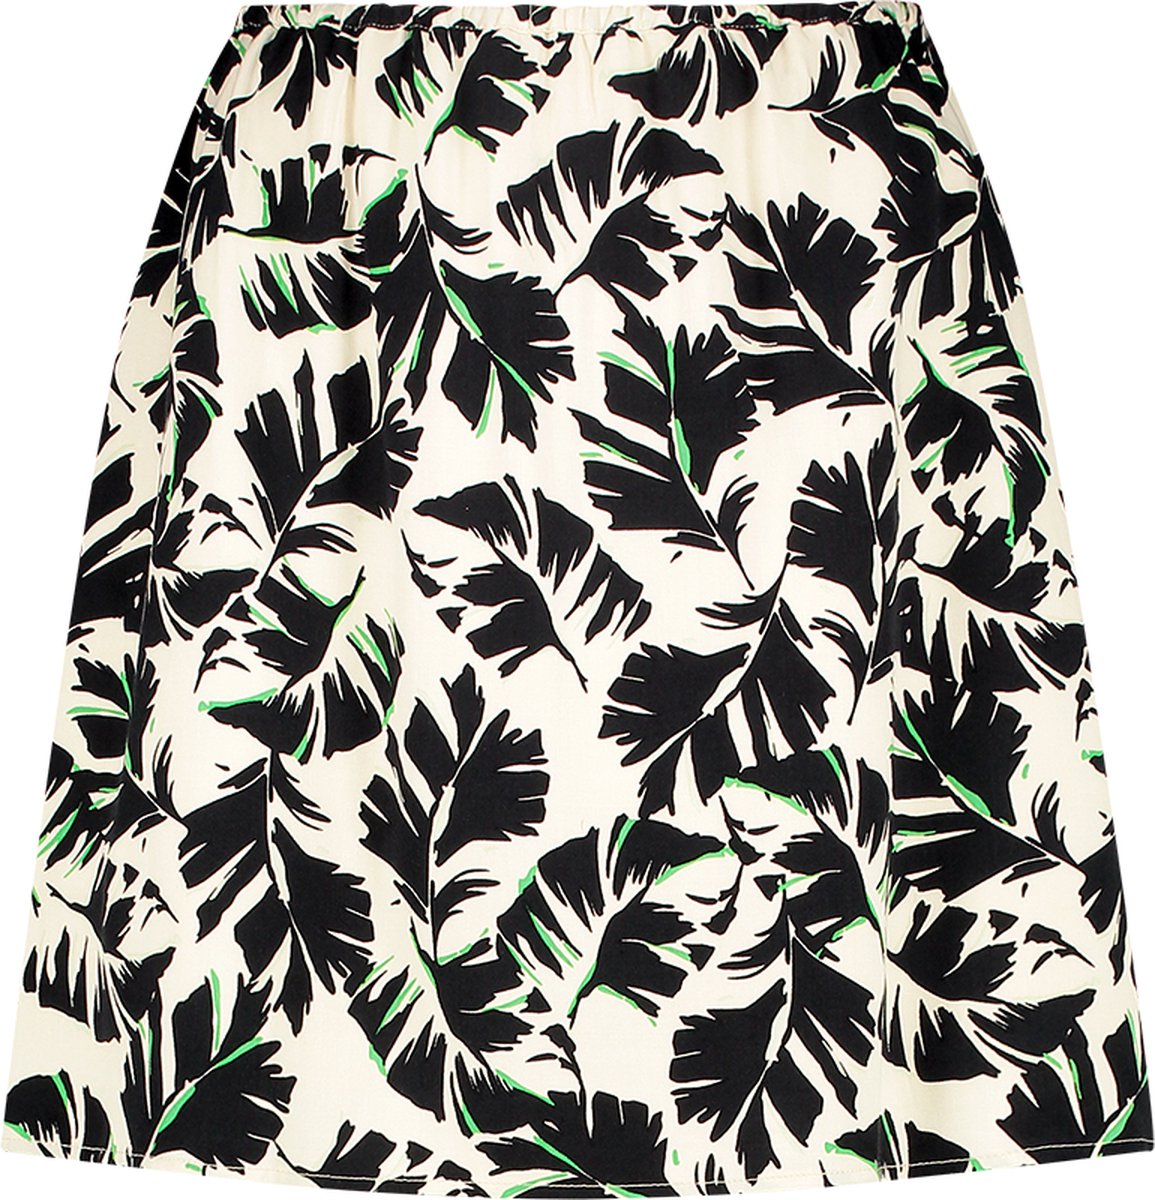 ANOTHER LABEL - fleurine leaf skirt - fern green leaf